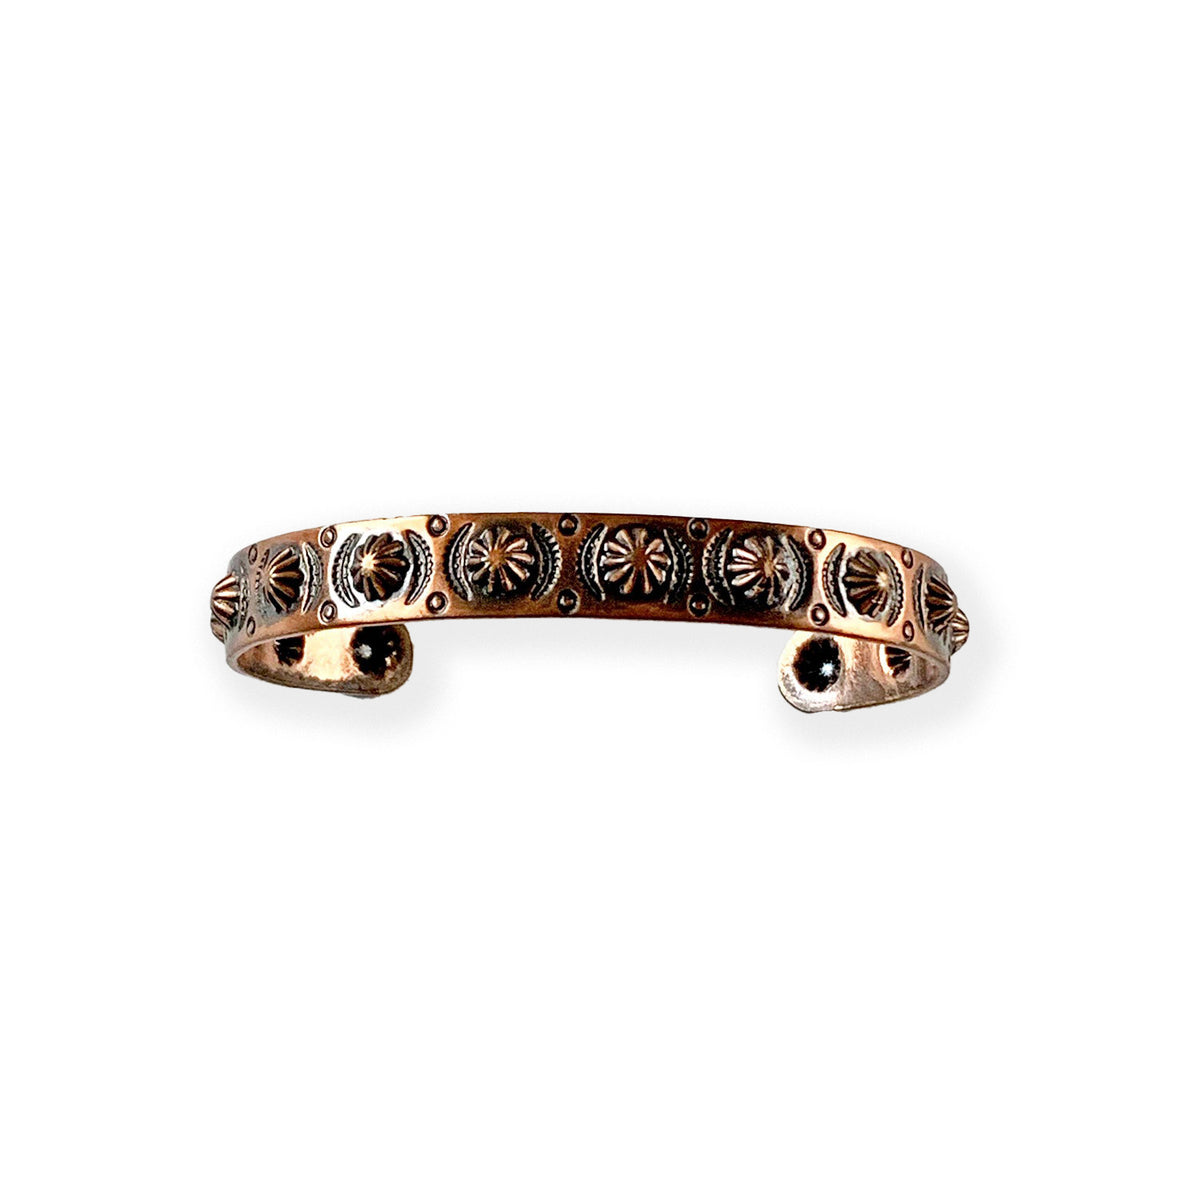 Vintage Copper Bell Punched Cuff Bracelet